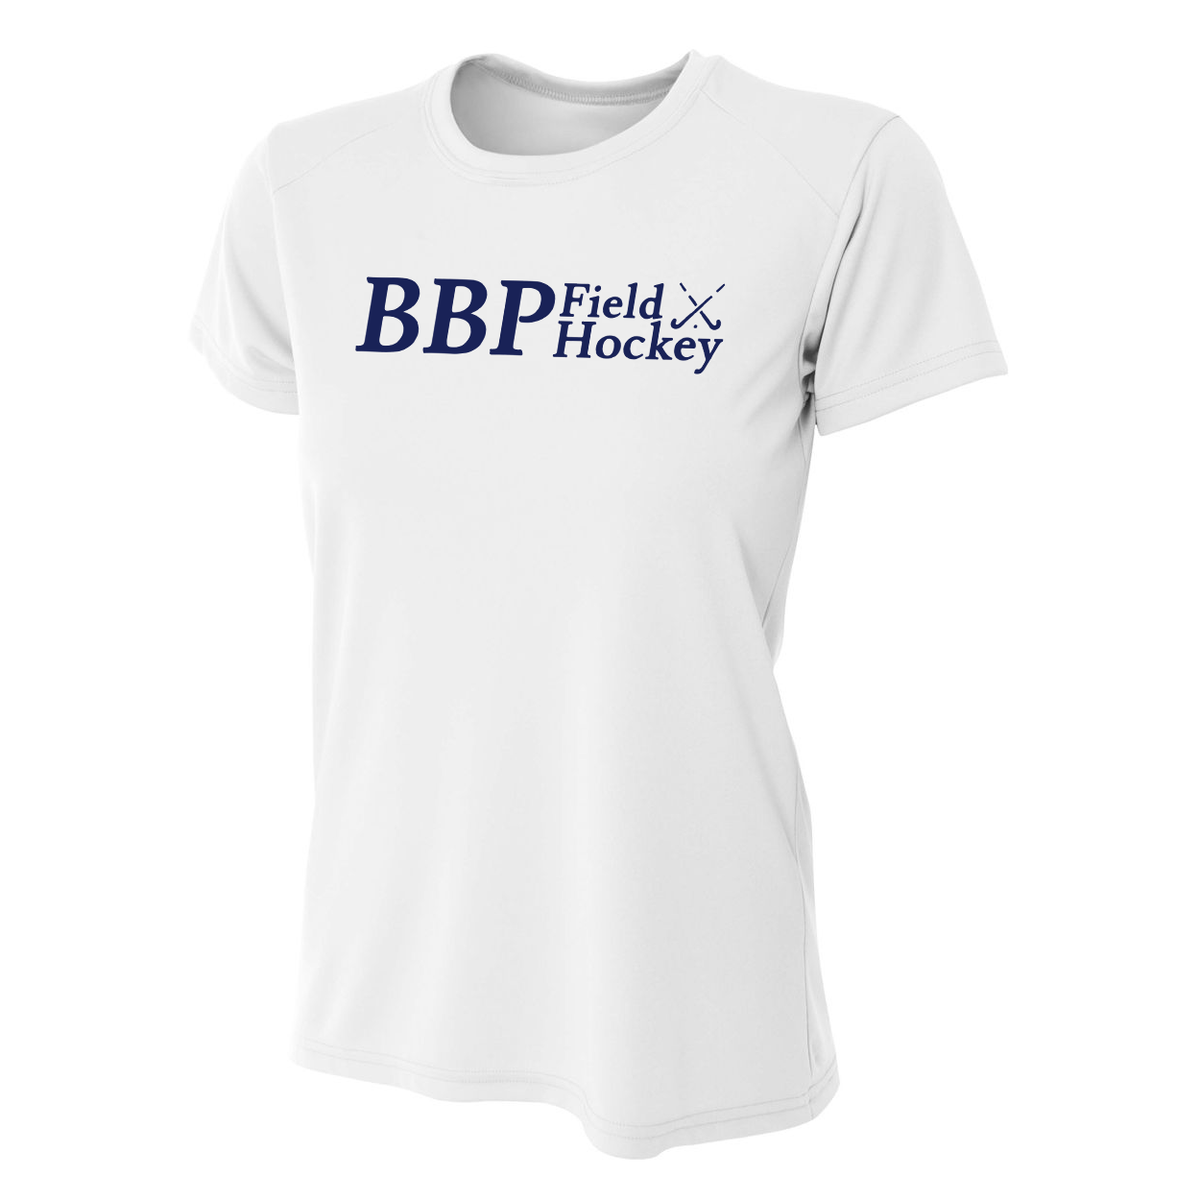 BBP Field Hockey Women's Cooling Performance Crew